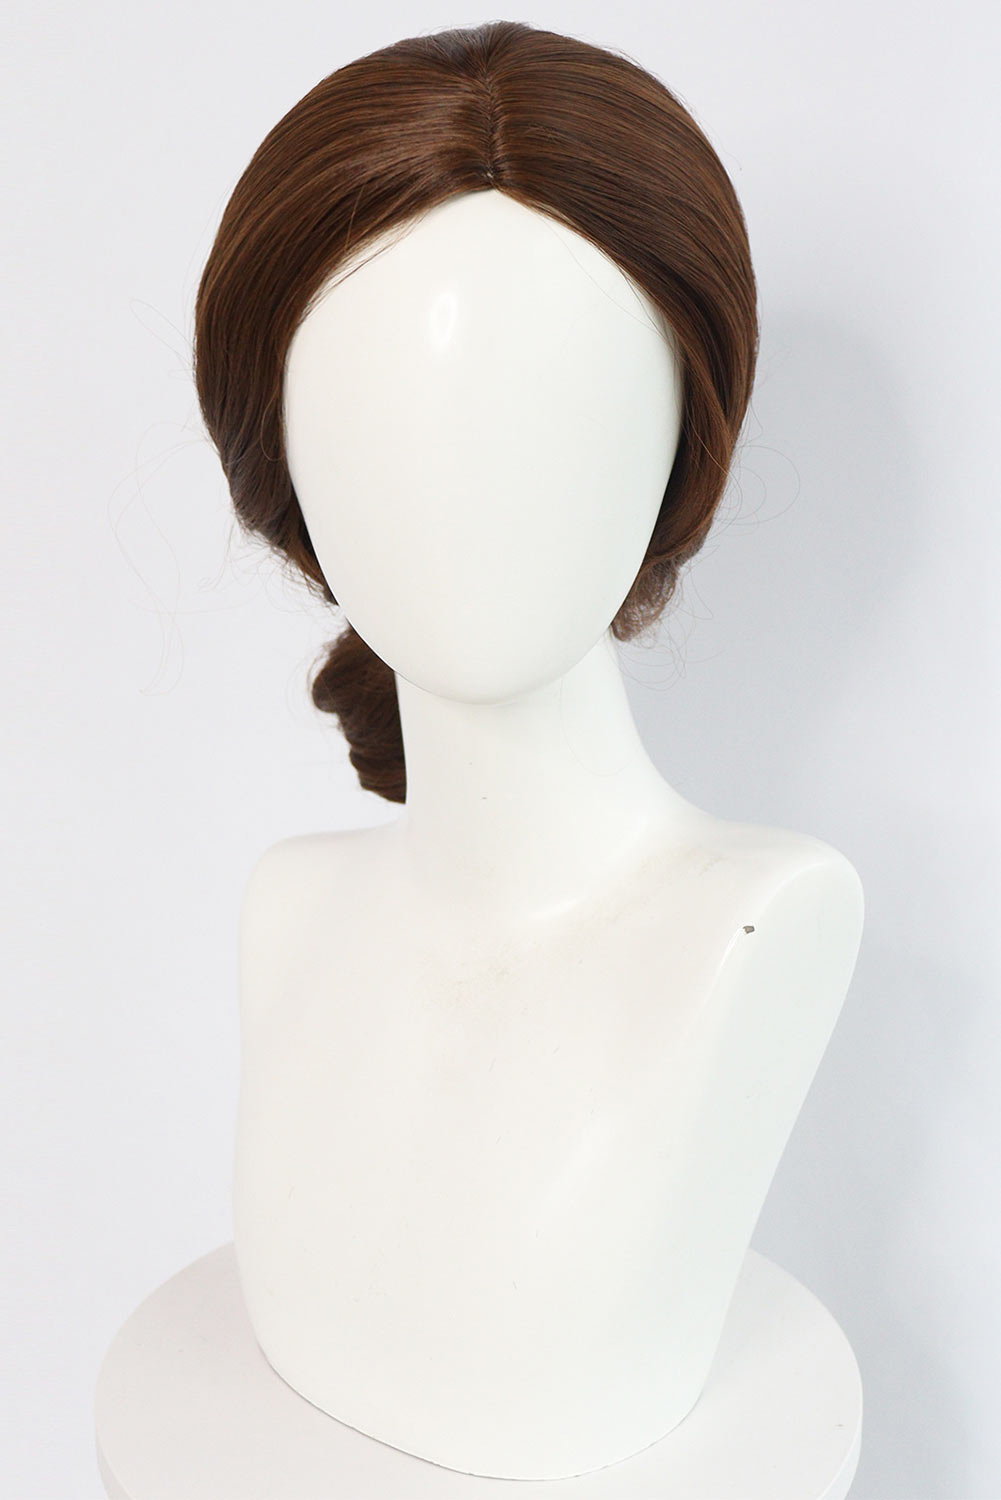 Padme Amidala Cosplay Brown Wig Heat Resistant Synthetic Hair Halloween Costume Accessories